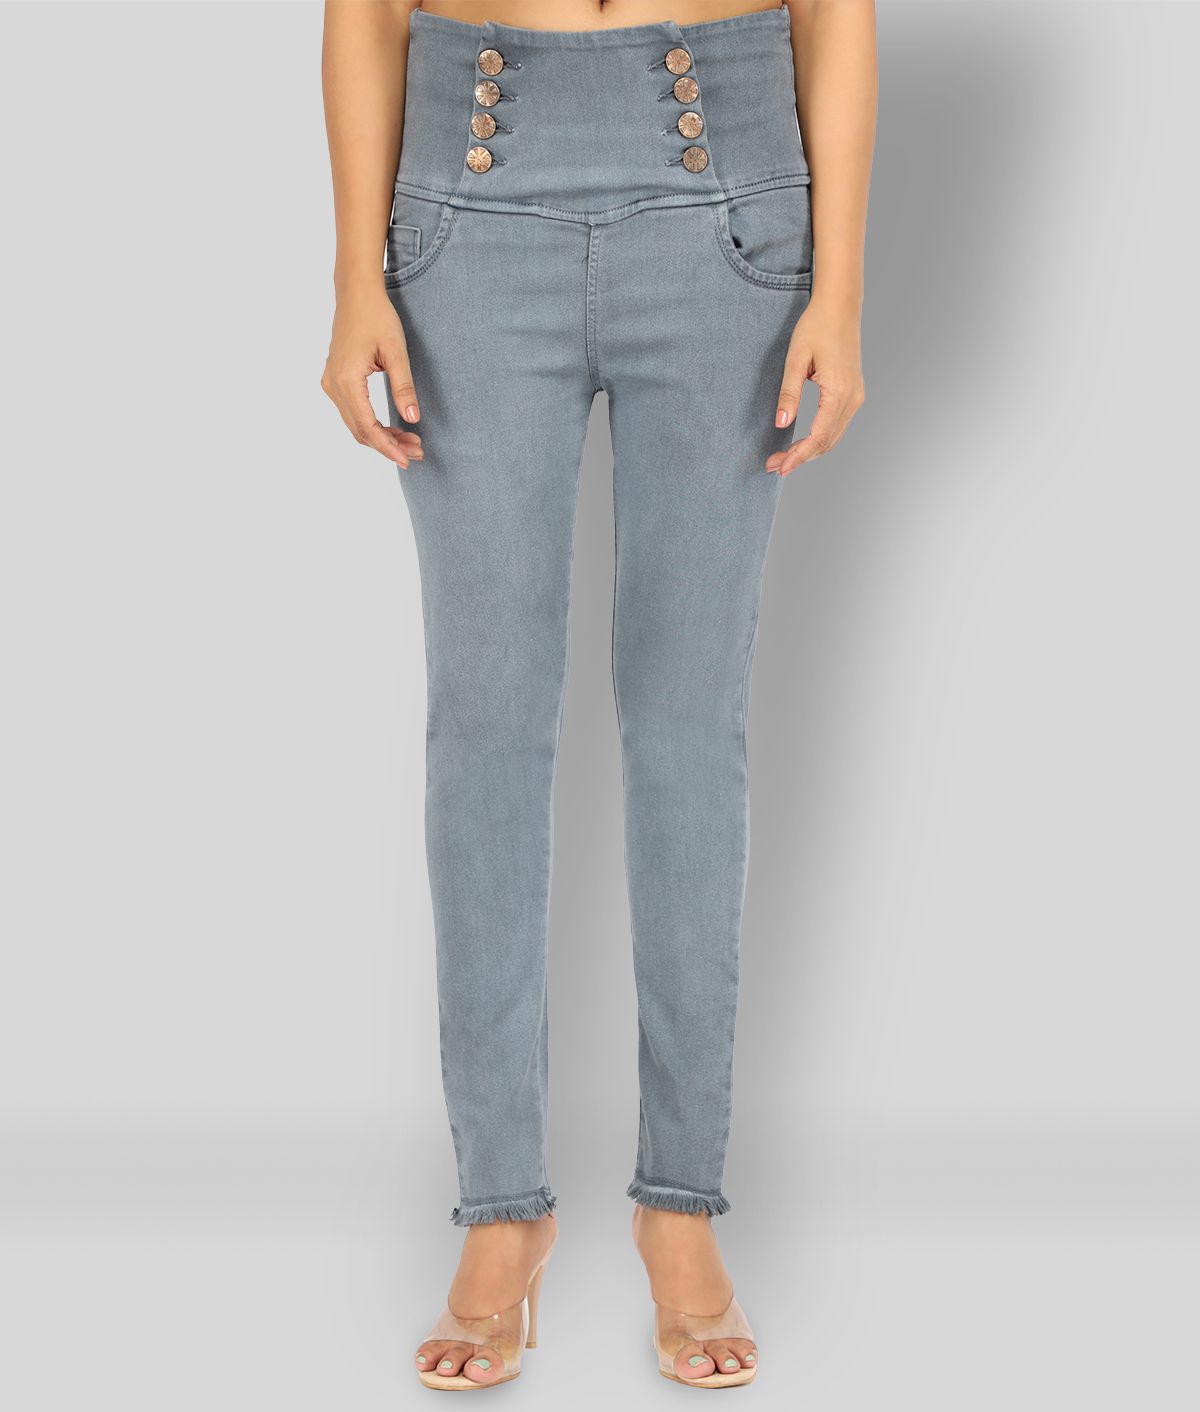     			AngelFab - Grey Denim Skinny Fit Women's Jeans ( Pack of 1 )